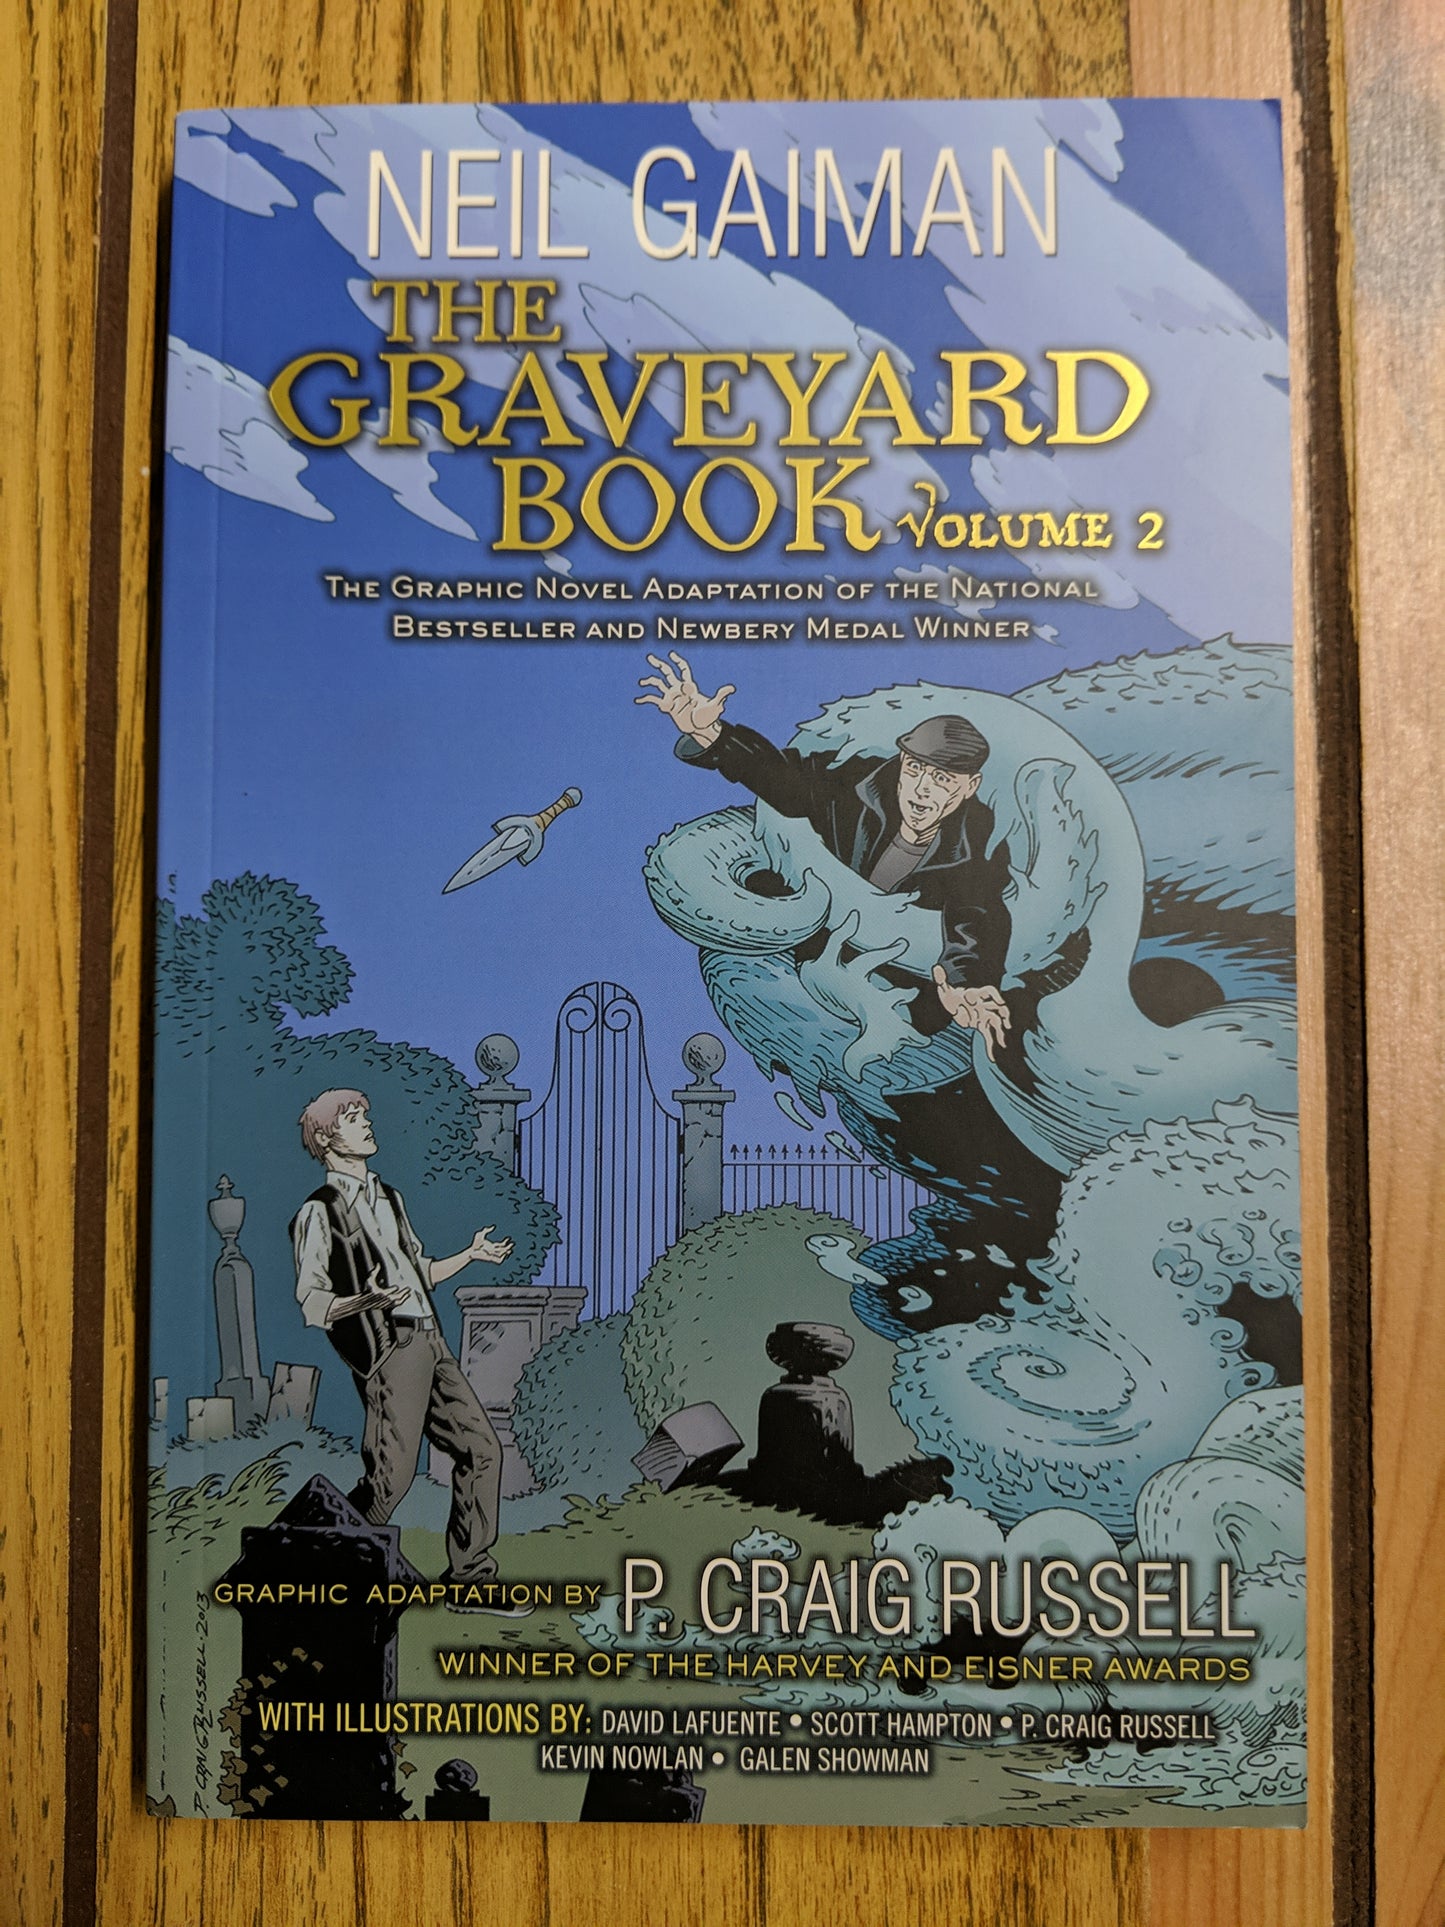 The Graveyard Book Vol 2